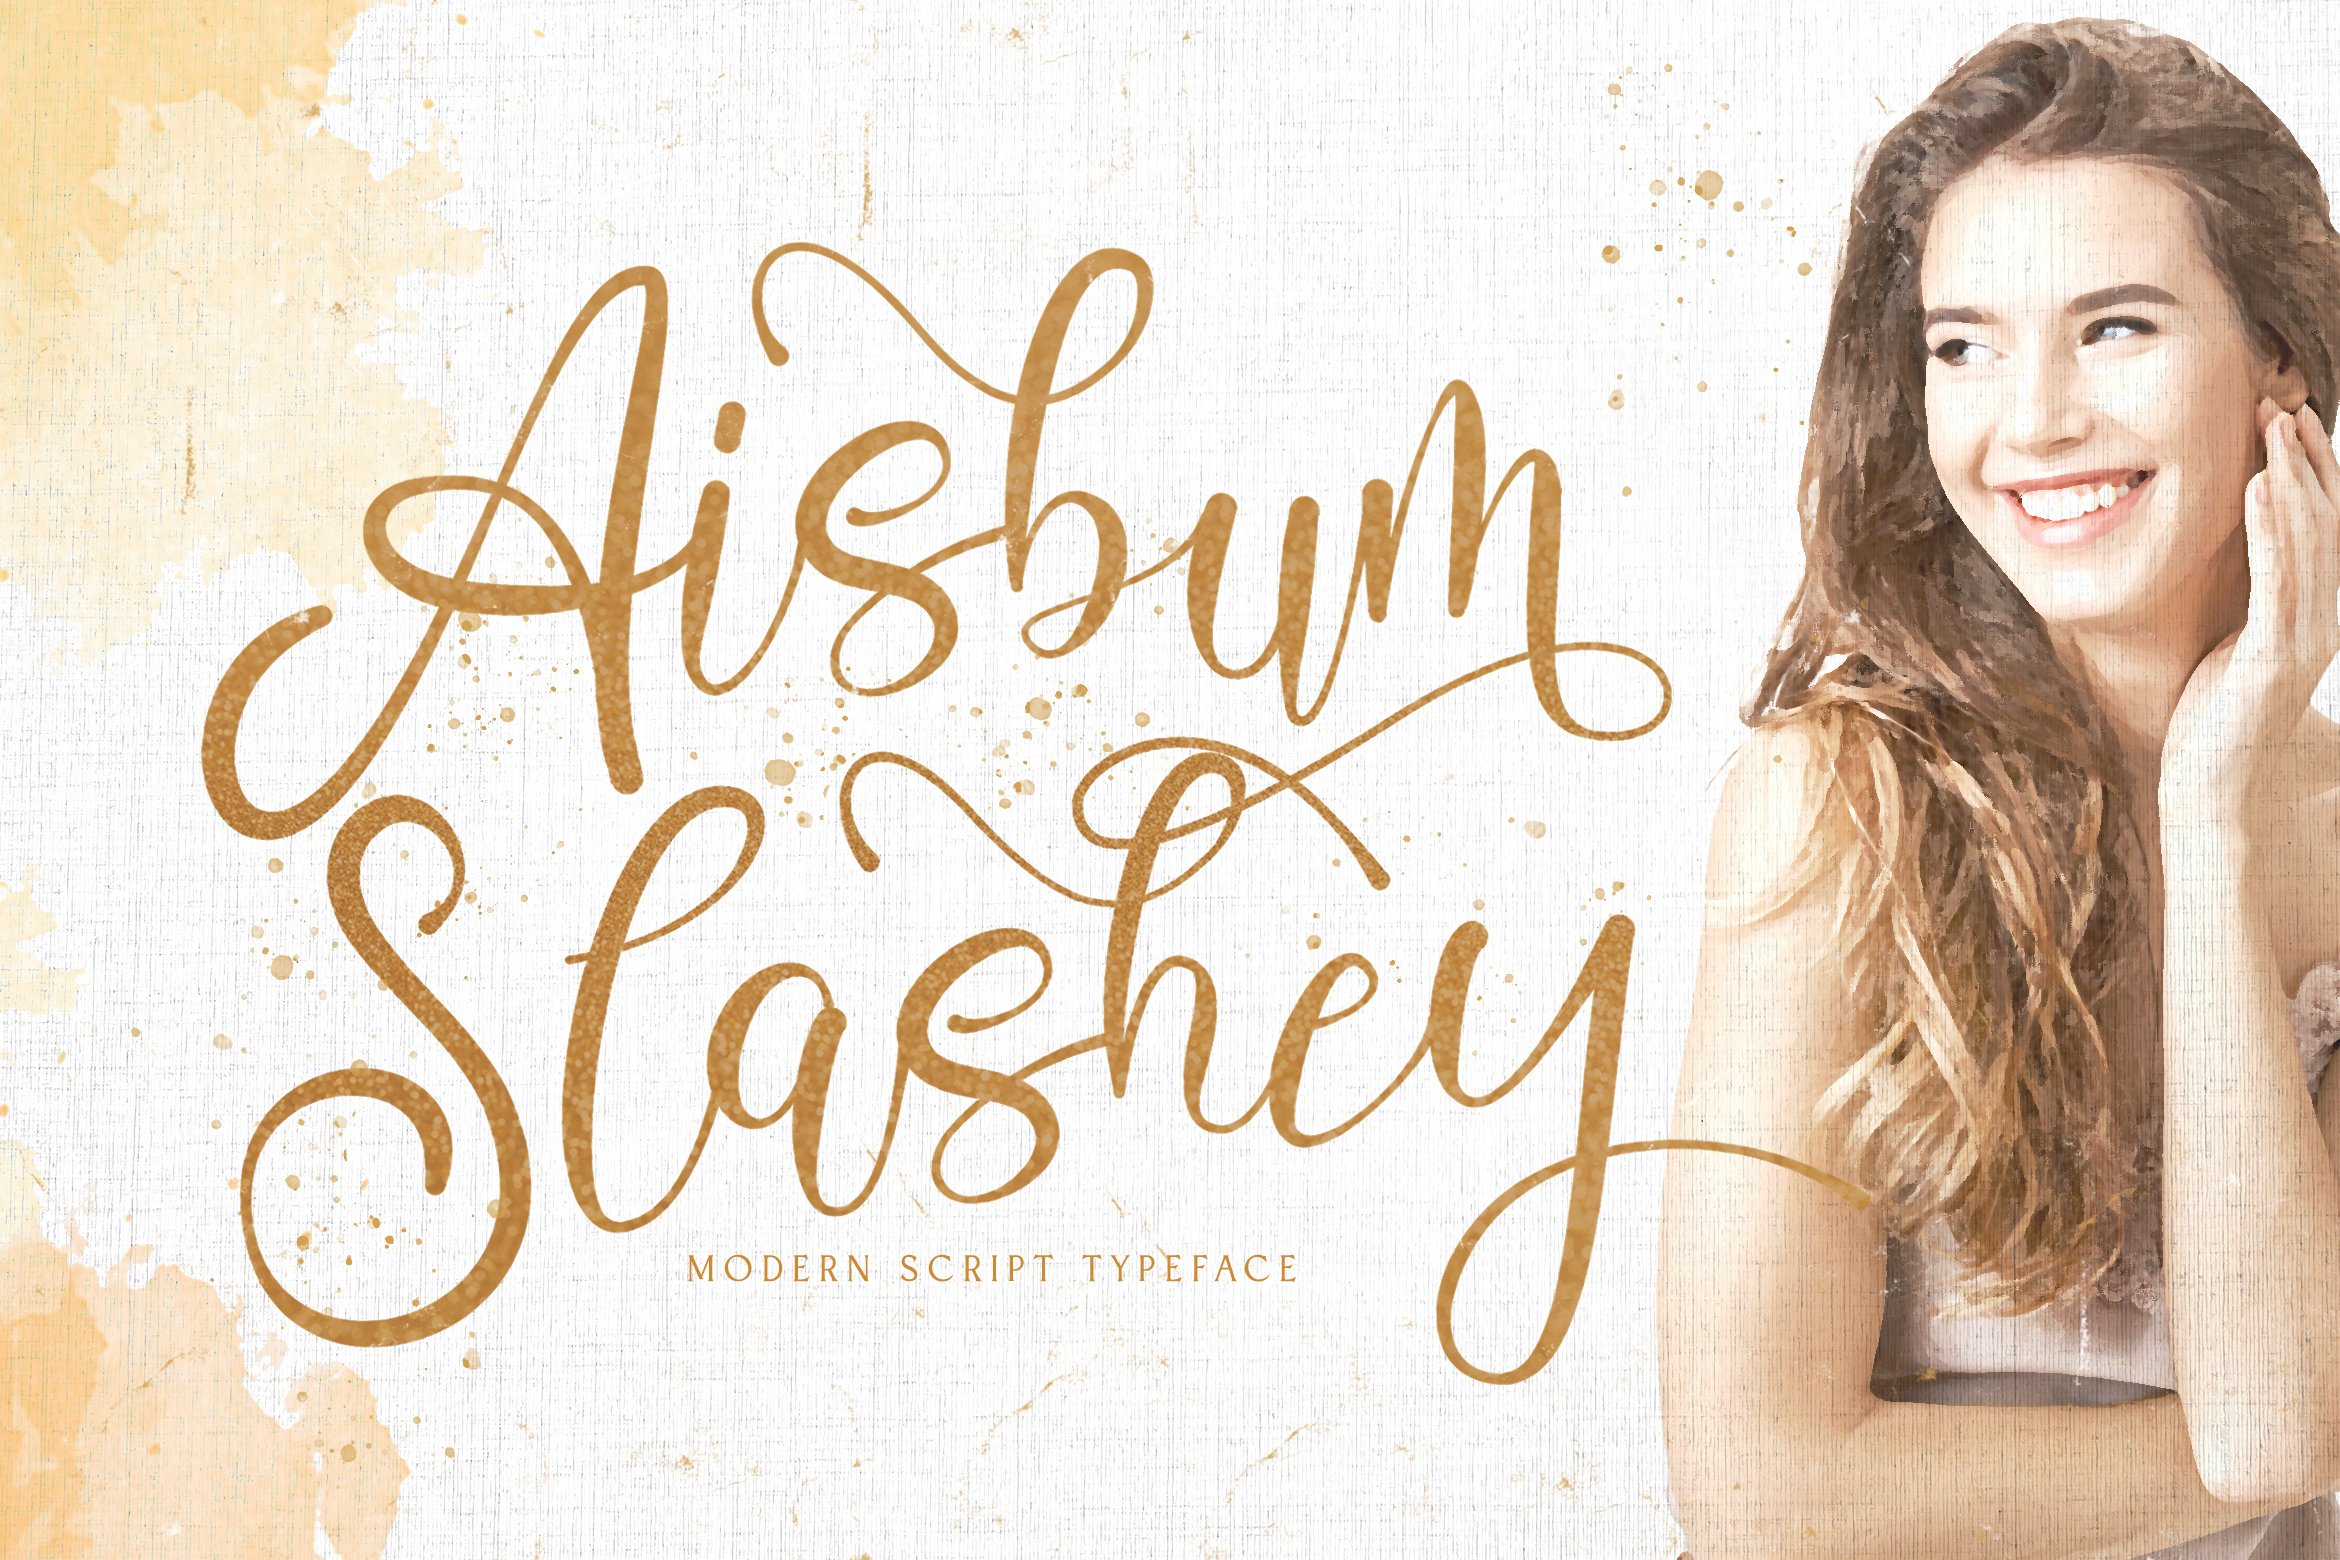 Aisbum Slashey - Modern Script Font cover image.